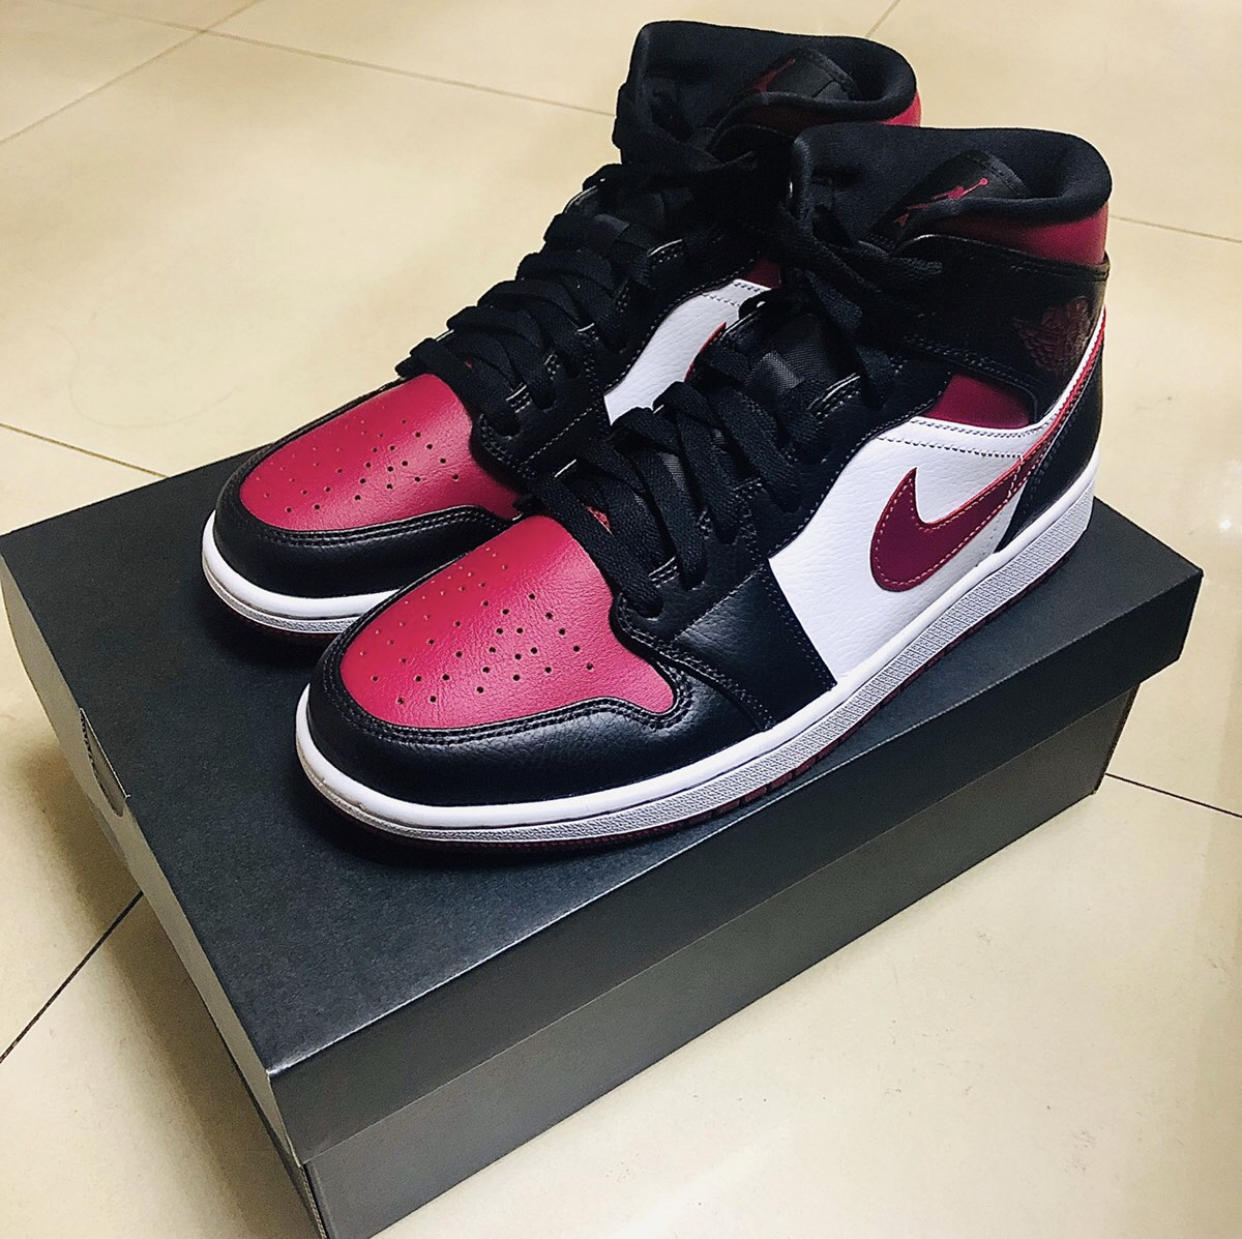 Air Jordan 1 Mid “Bred Toe” White Black Red On Sale – Sneaker Hello